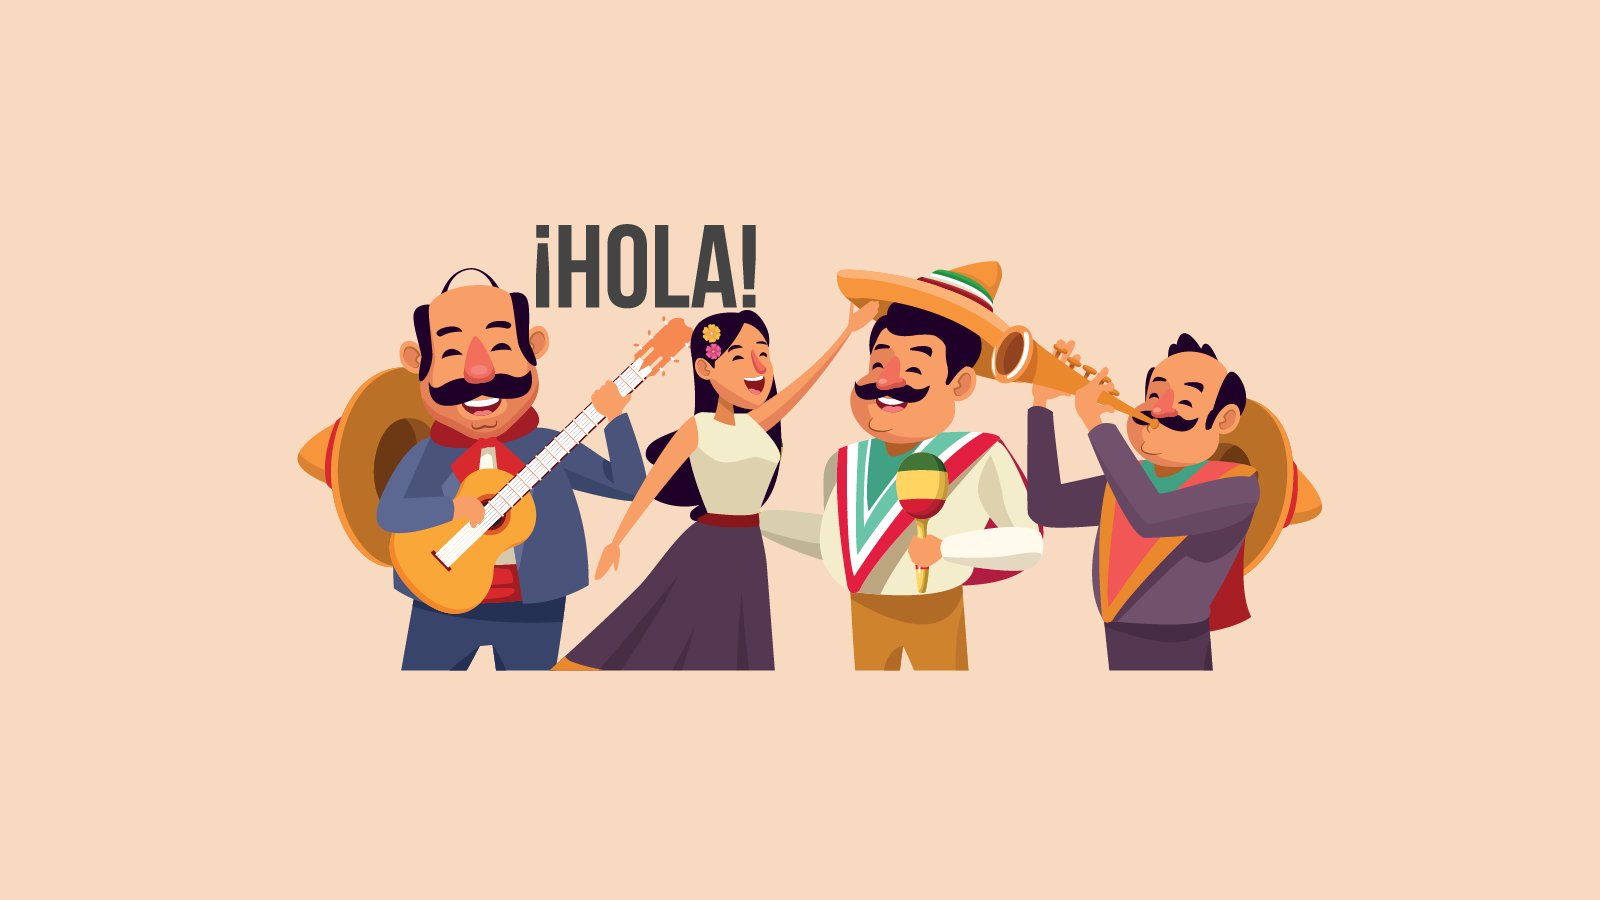 spanish people singing